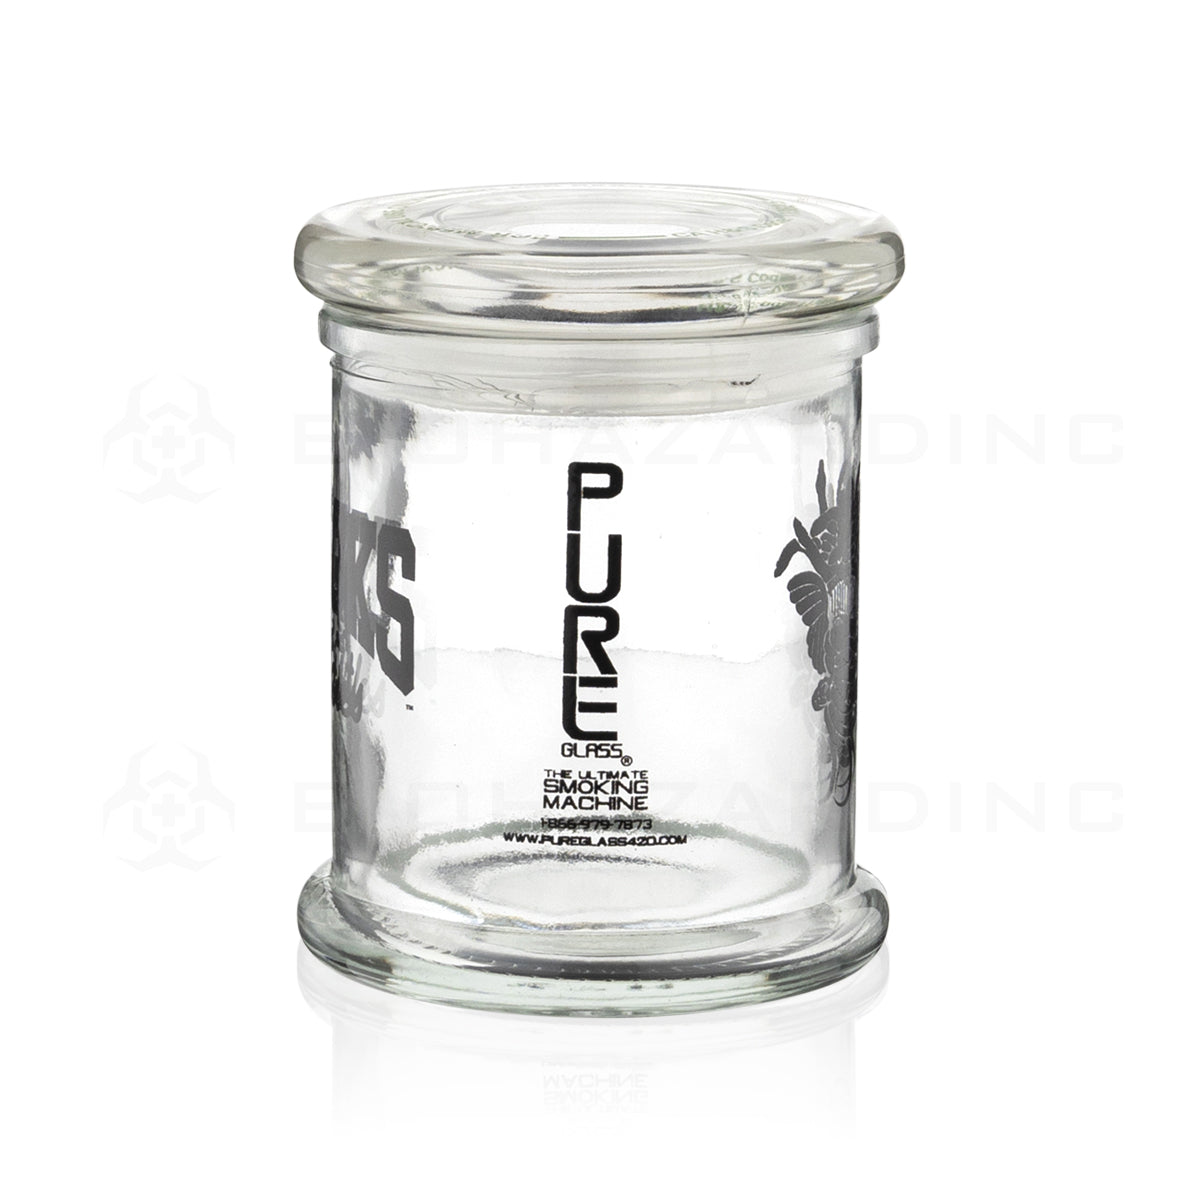 Crooks & Castles x PURE Glass | Glass Nug Jar | 32oz Glass Jar Pure Glass   